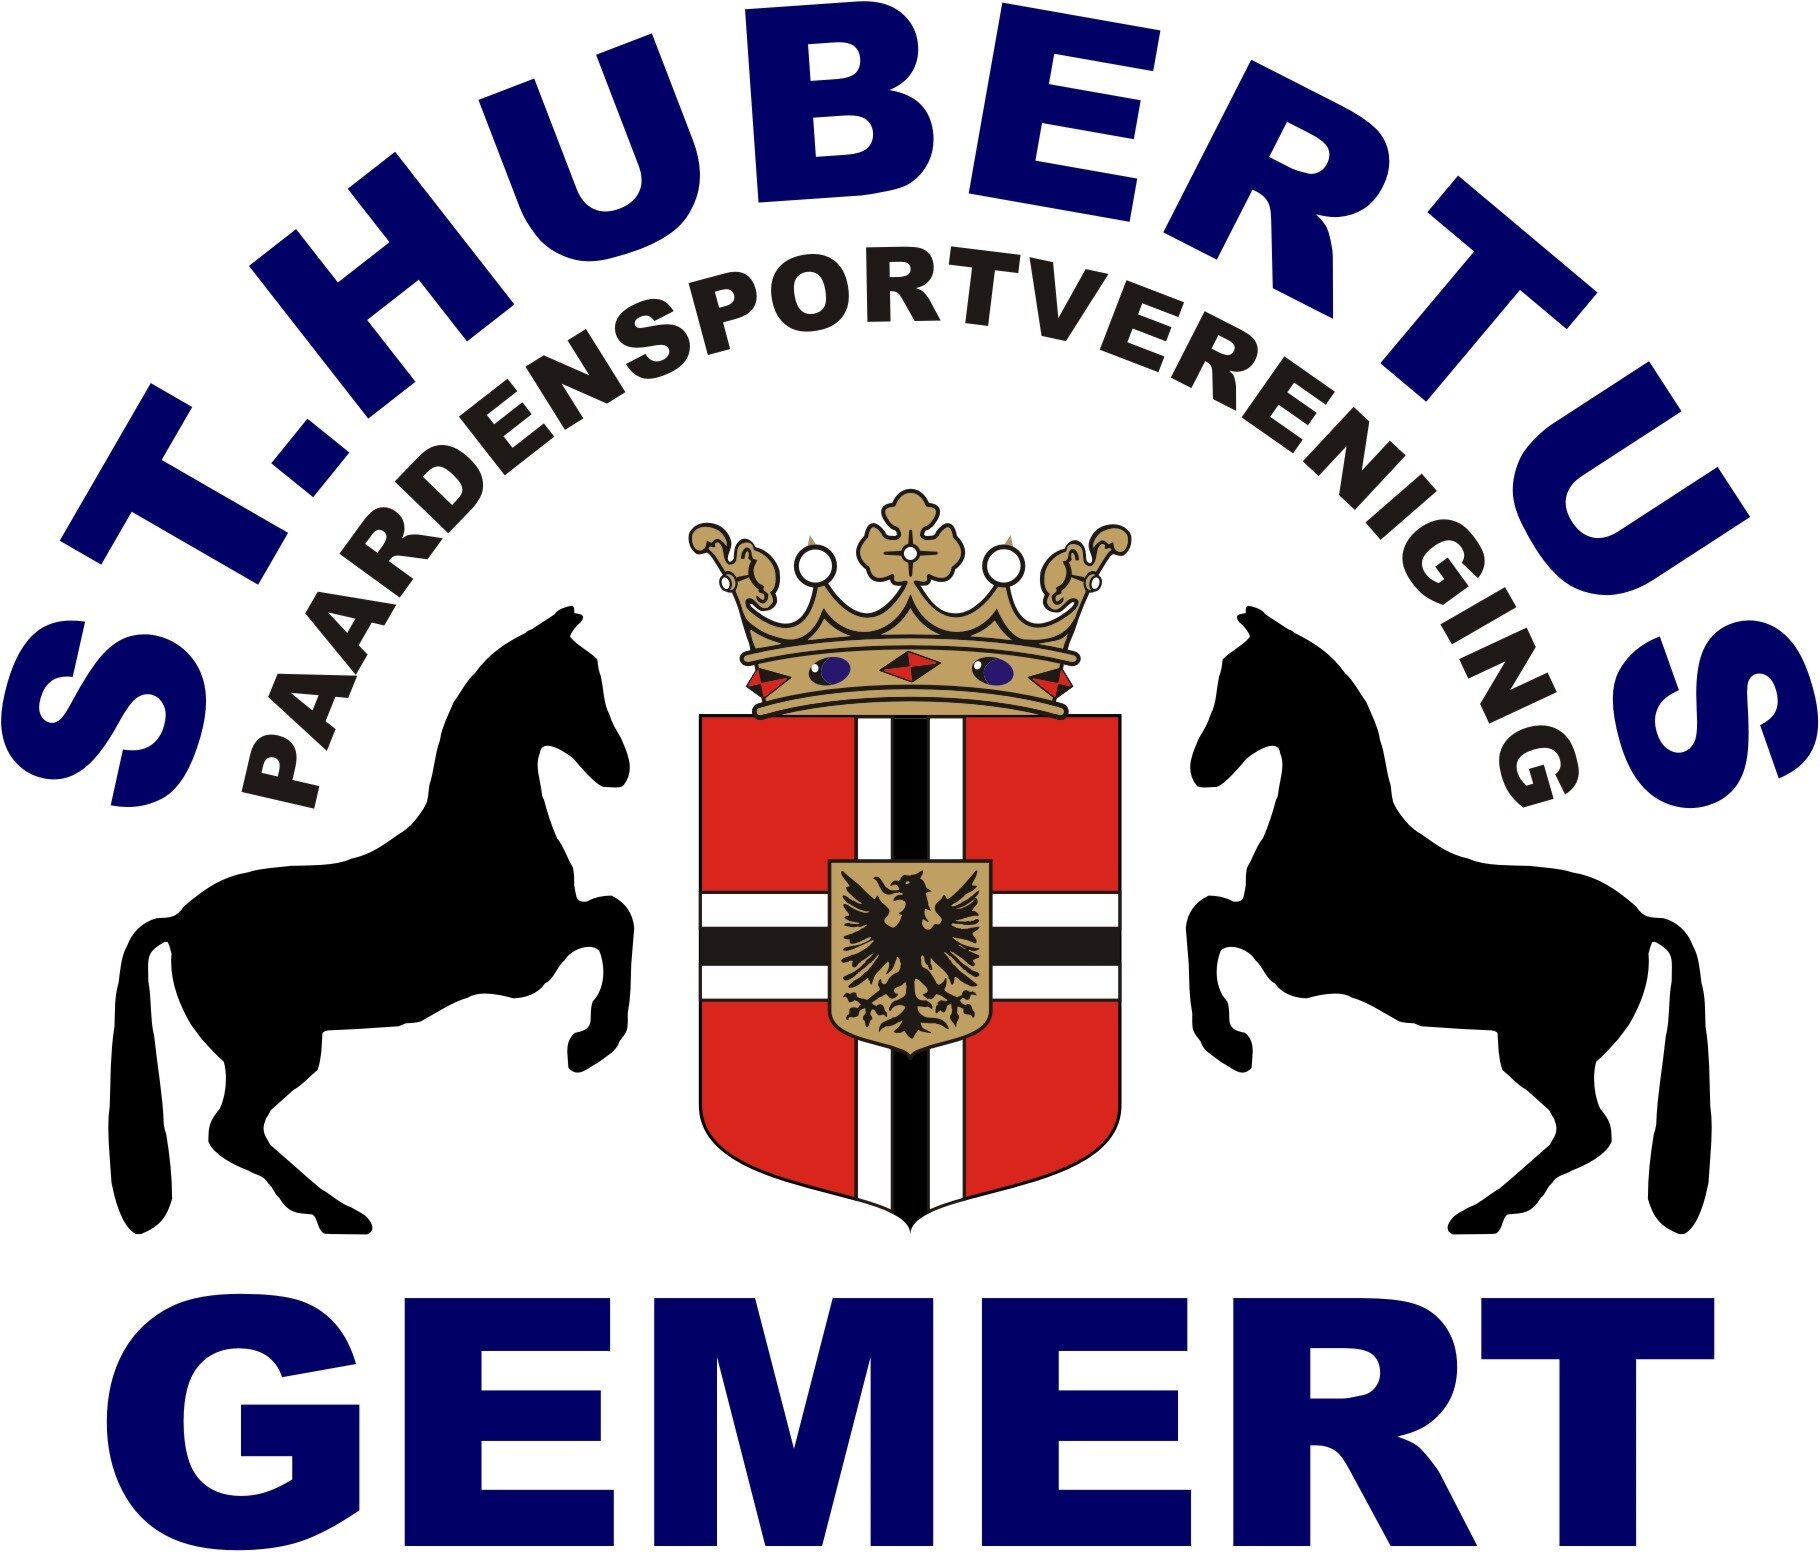 Paardensportvereniging St. Hubertus Gemert